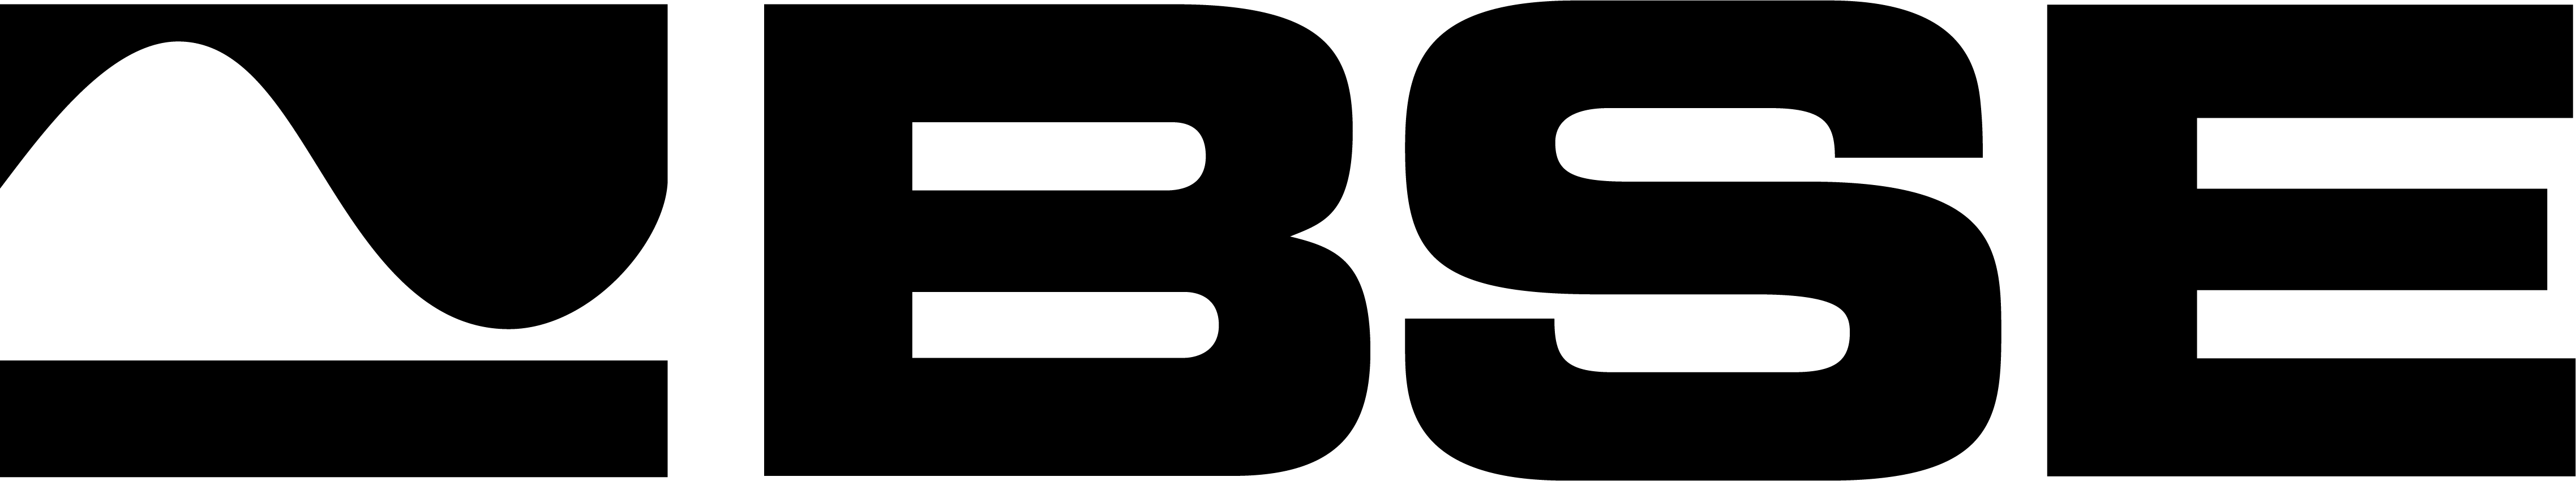 BSE-logo